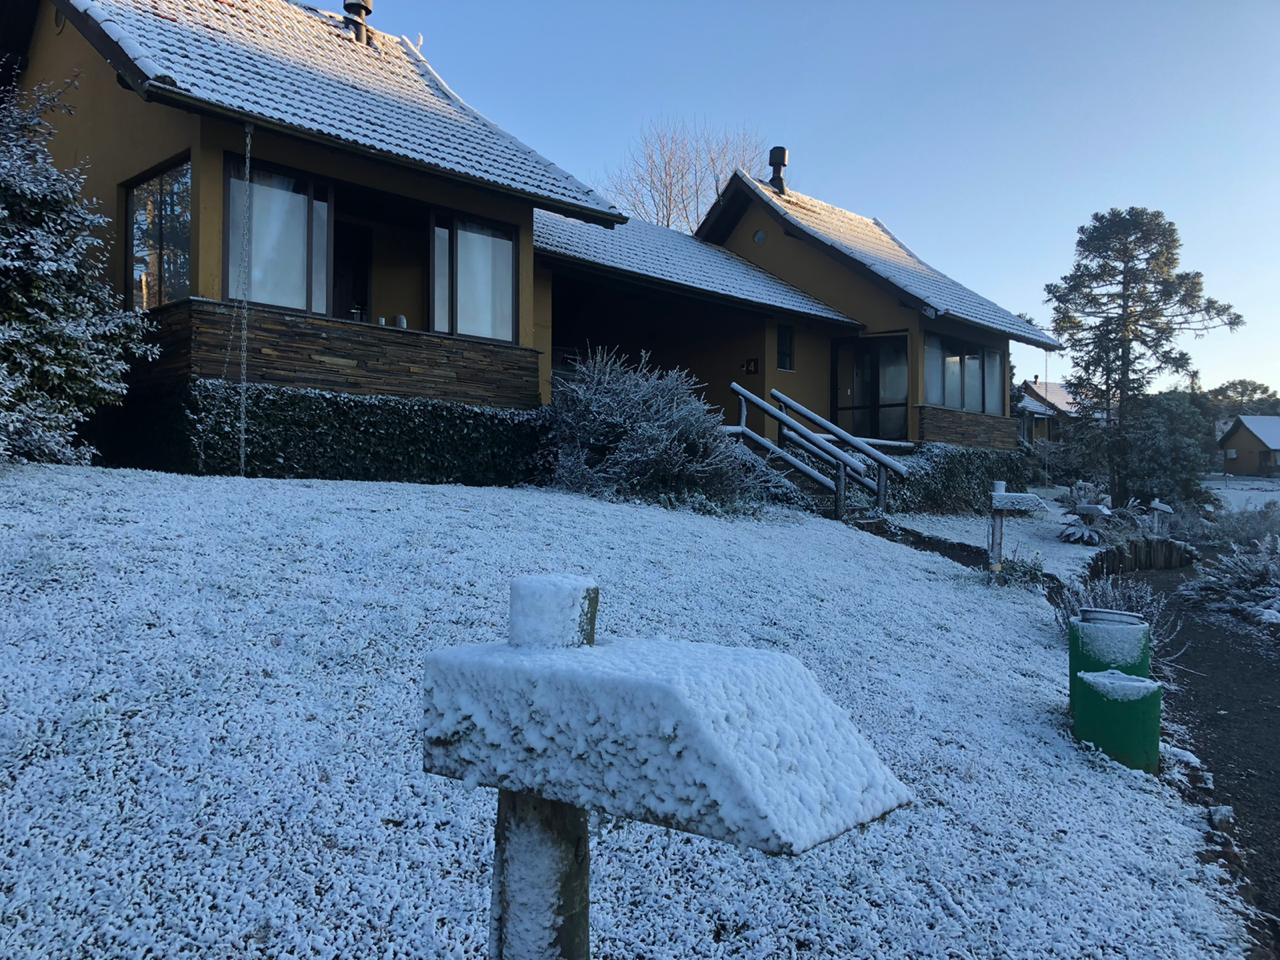 Neve em Santa Catarina: Bom Jardim da Serra bate recorde de temperatura negativa